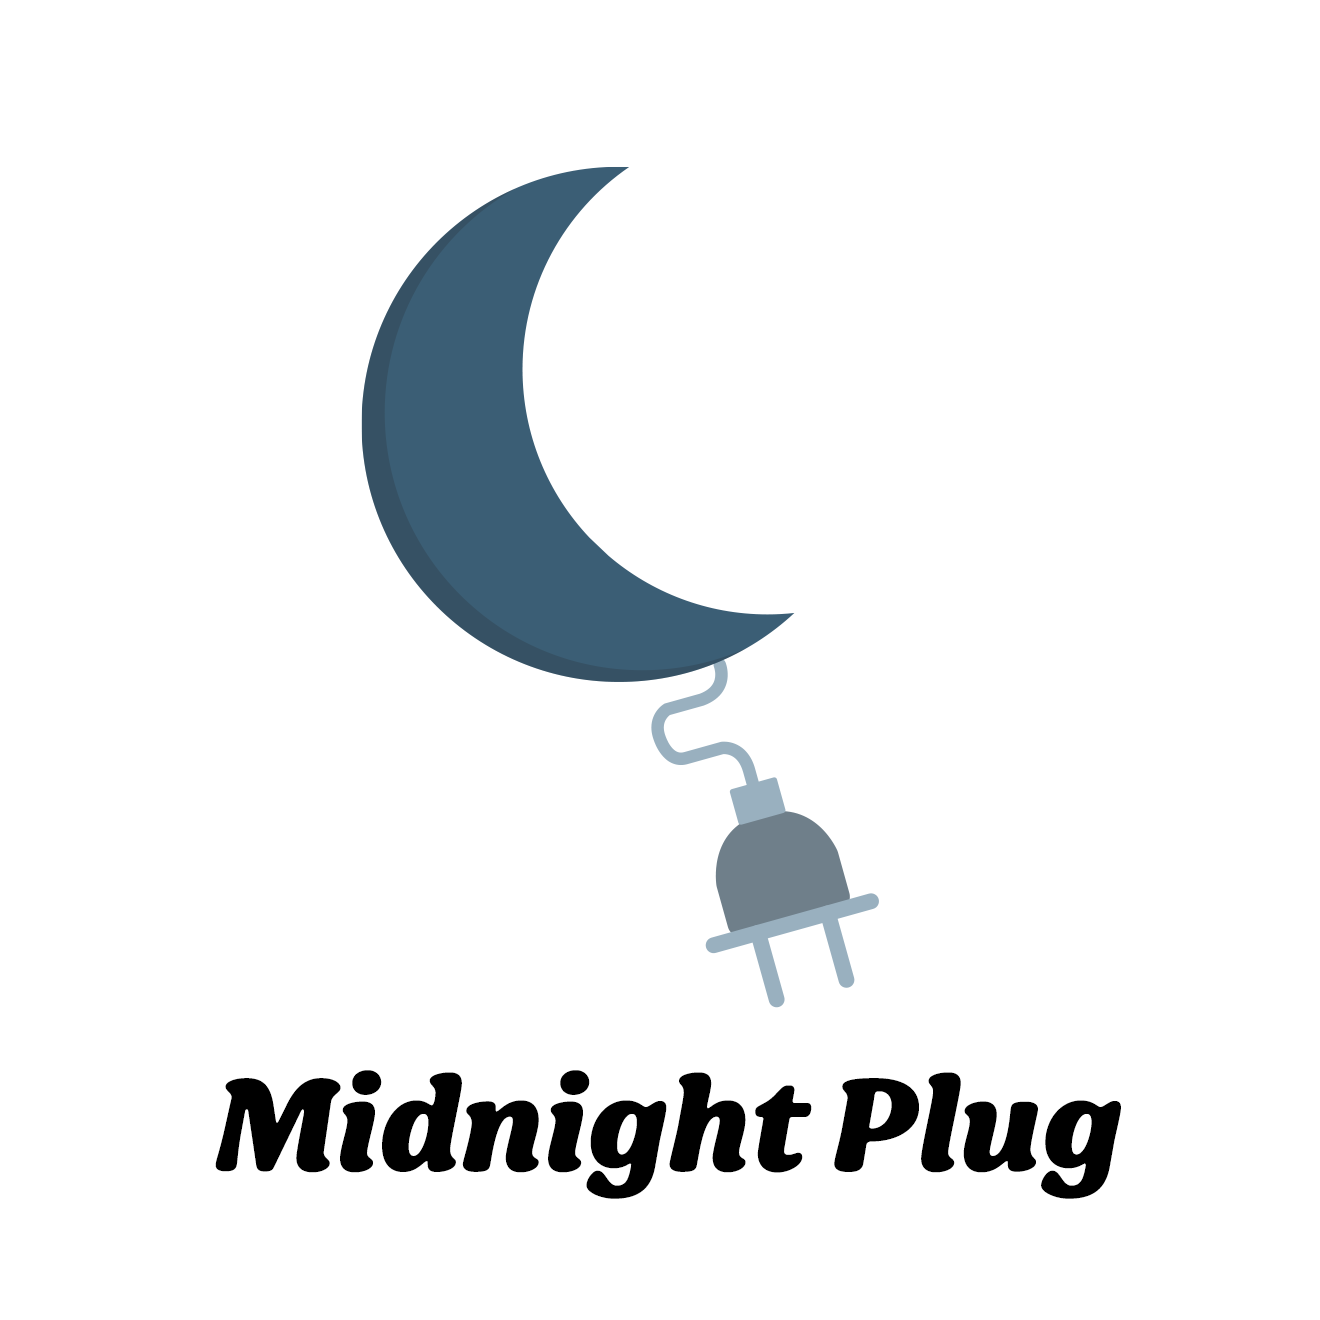 The Midnight Plug